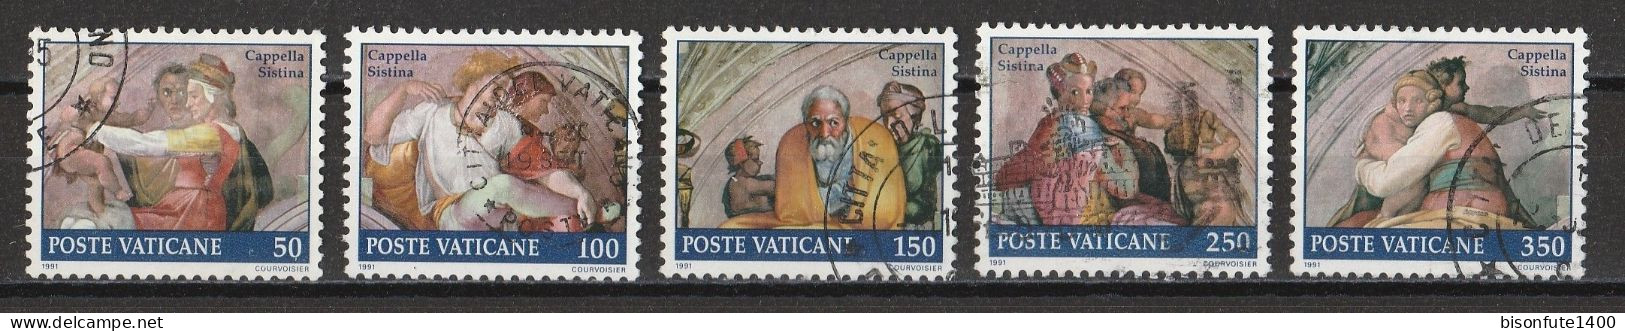 Vatican 1991 : Timbres Yvert & Tellier N° 891 - 892 - 893 - 894 - 895 - 897 - 898 - 899 - 900 Et 901 Oblitérés. - Usati